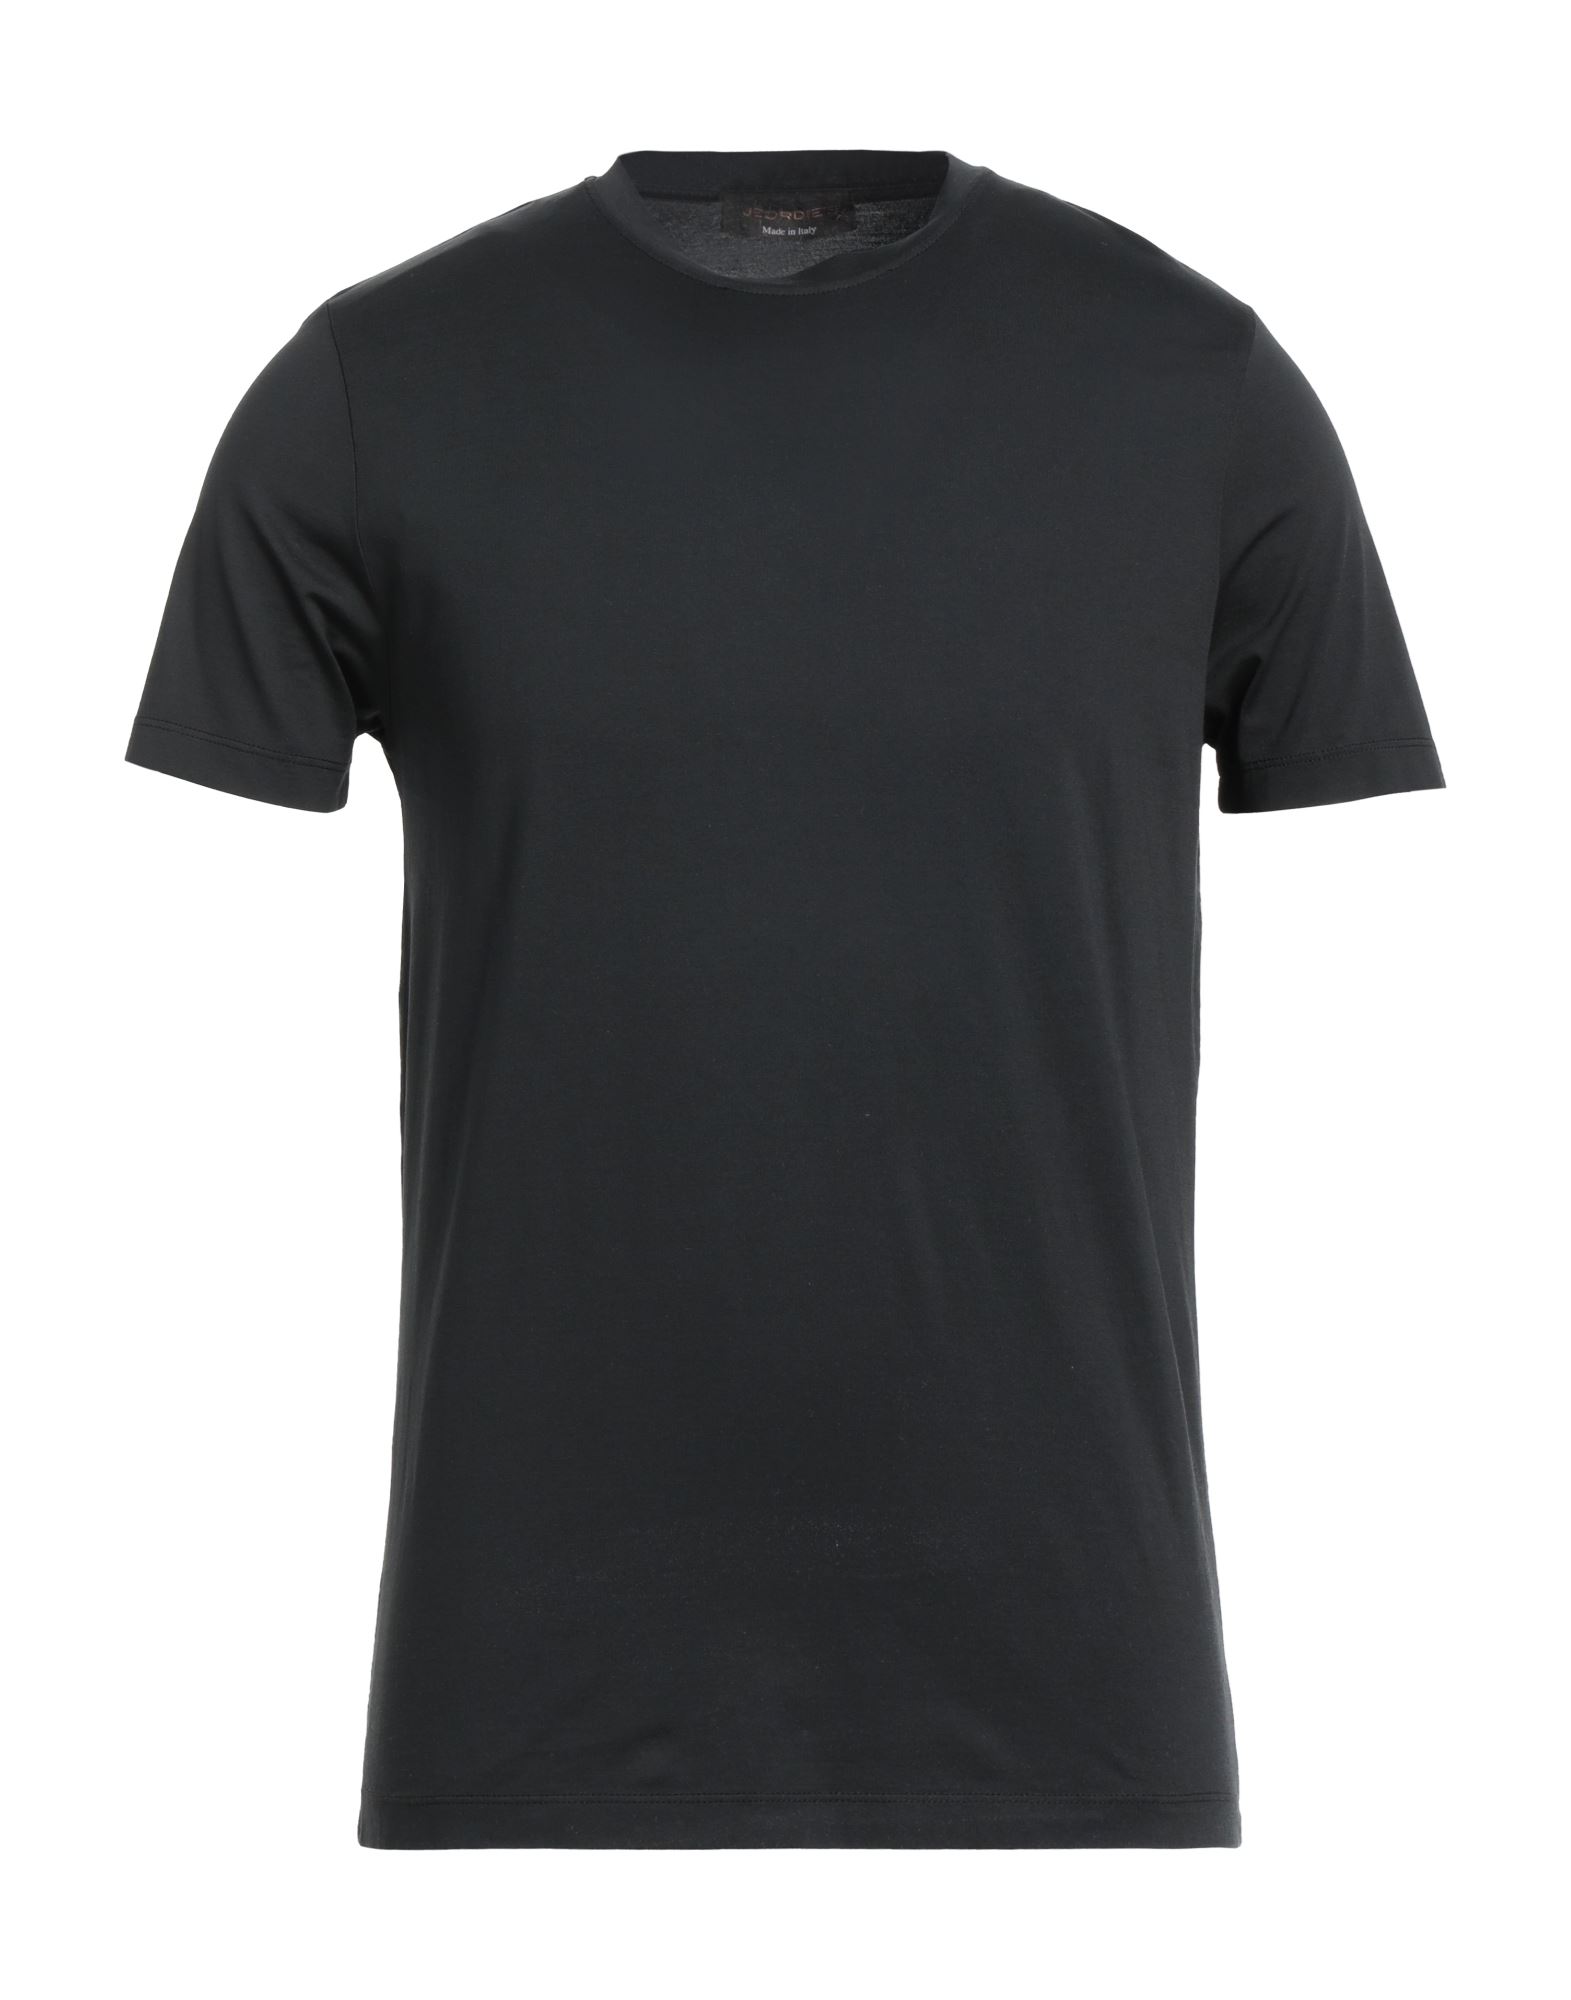 Jeordie's Man T-shirt Black Size Xl Supima